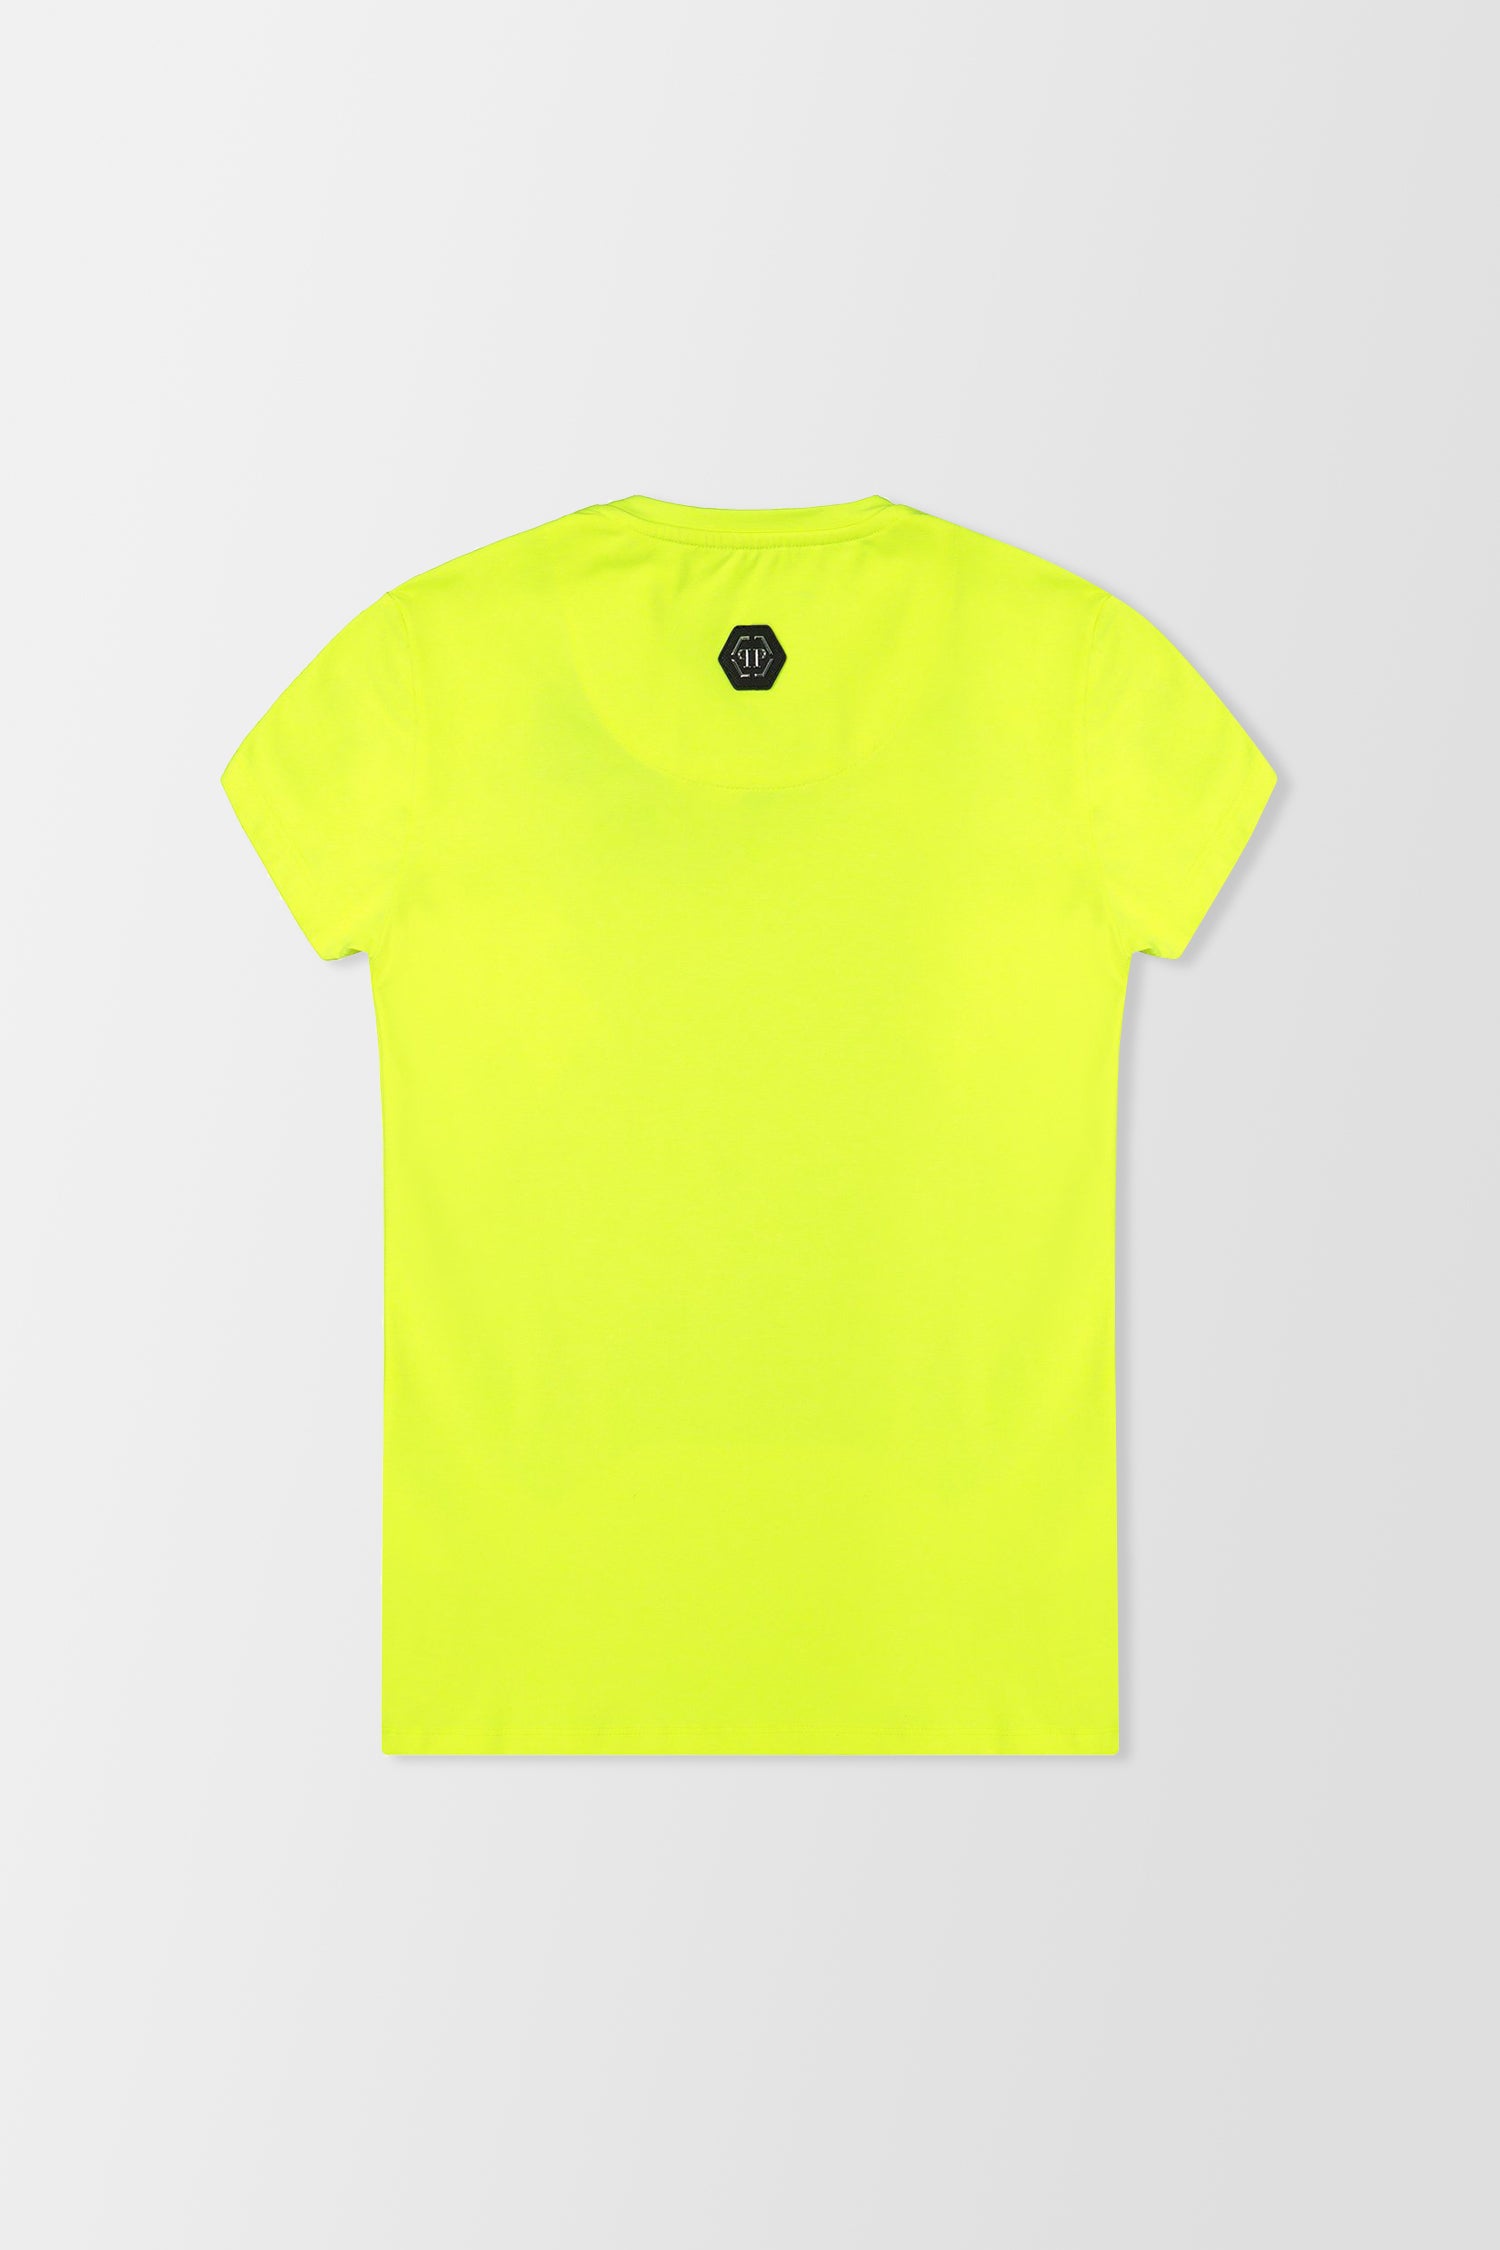 Philipp Plein Yellow Round Neck SS Teddy Bear T-Shirt